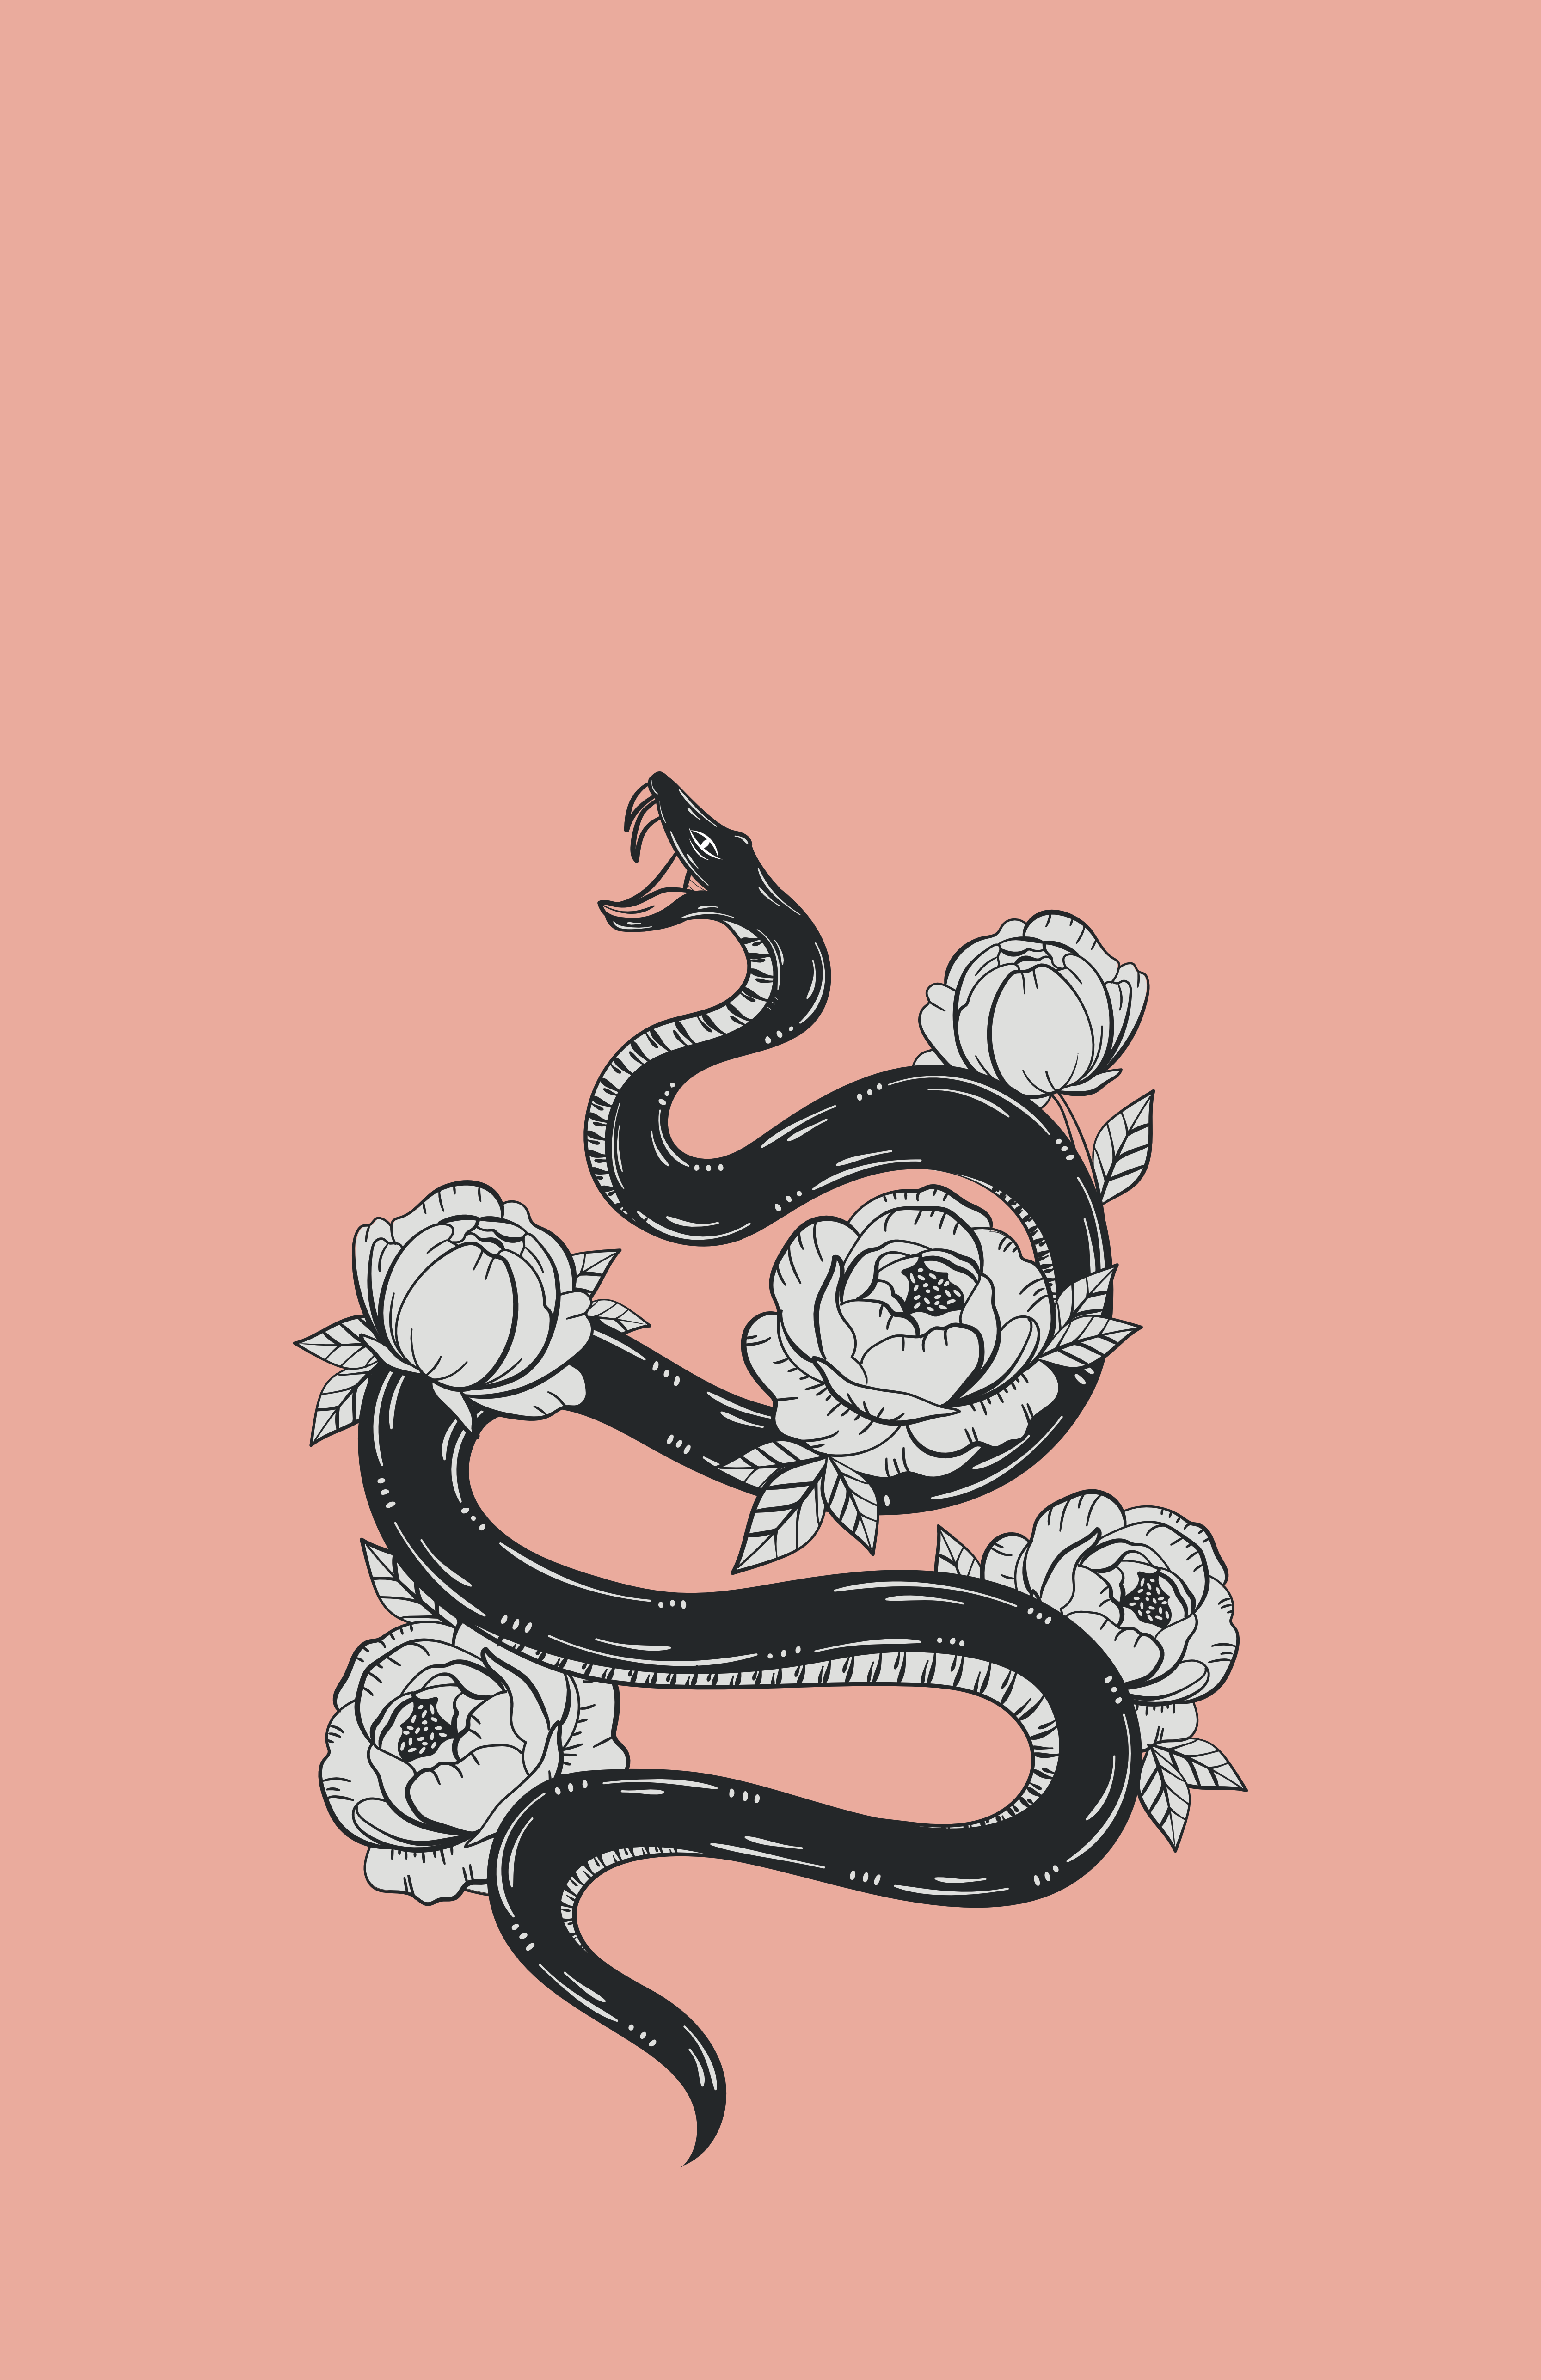 Snake Tattoo Wallpaper Free Snake Tattoo Background